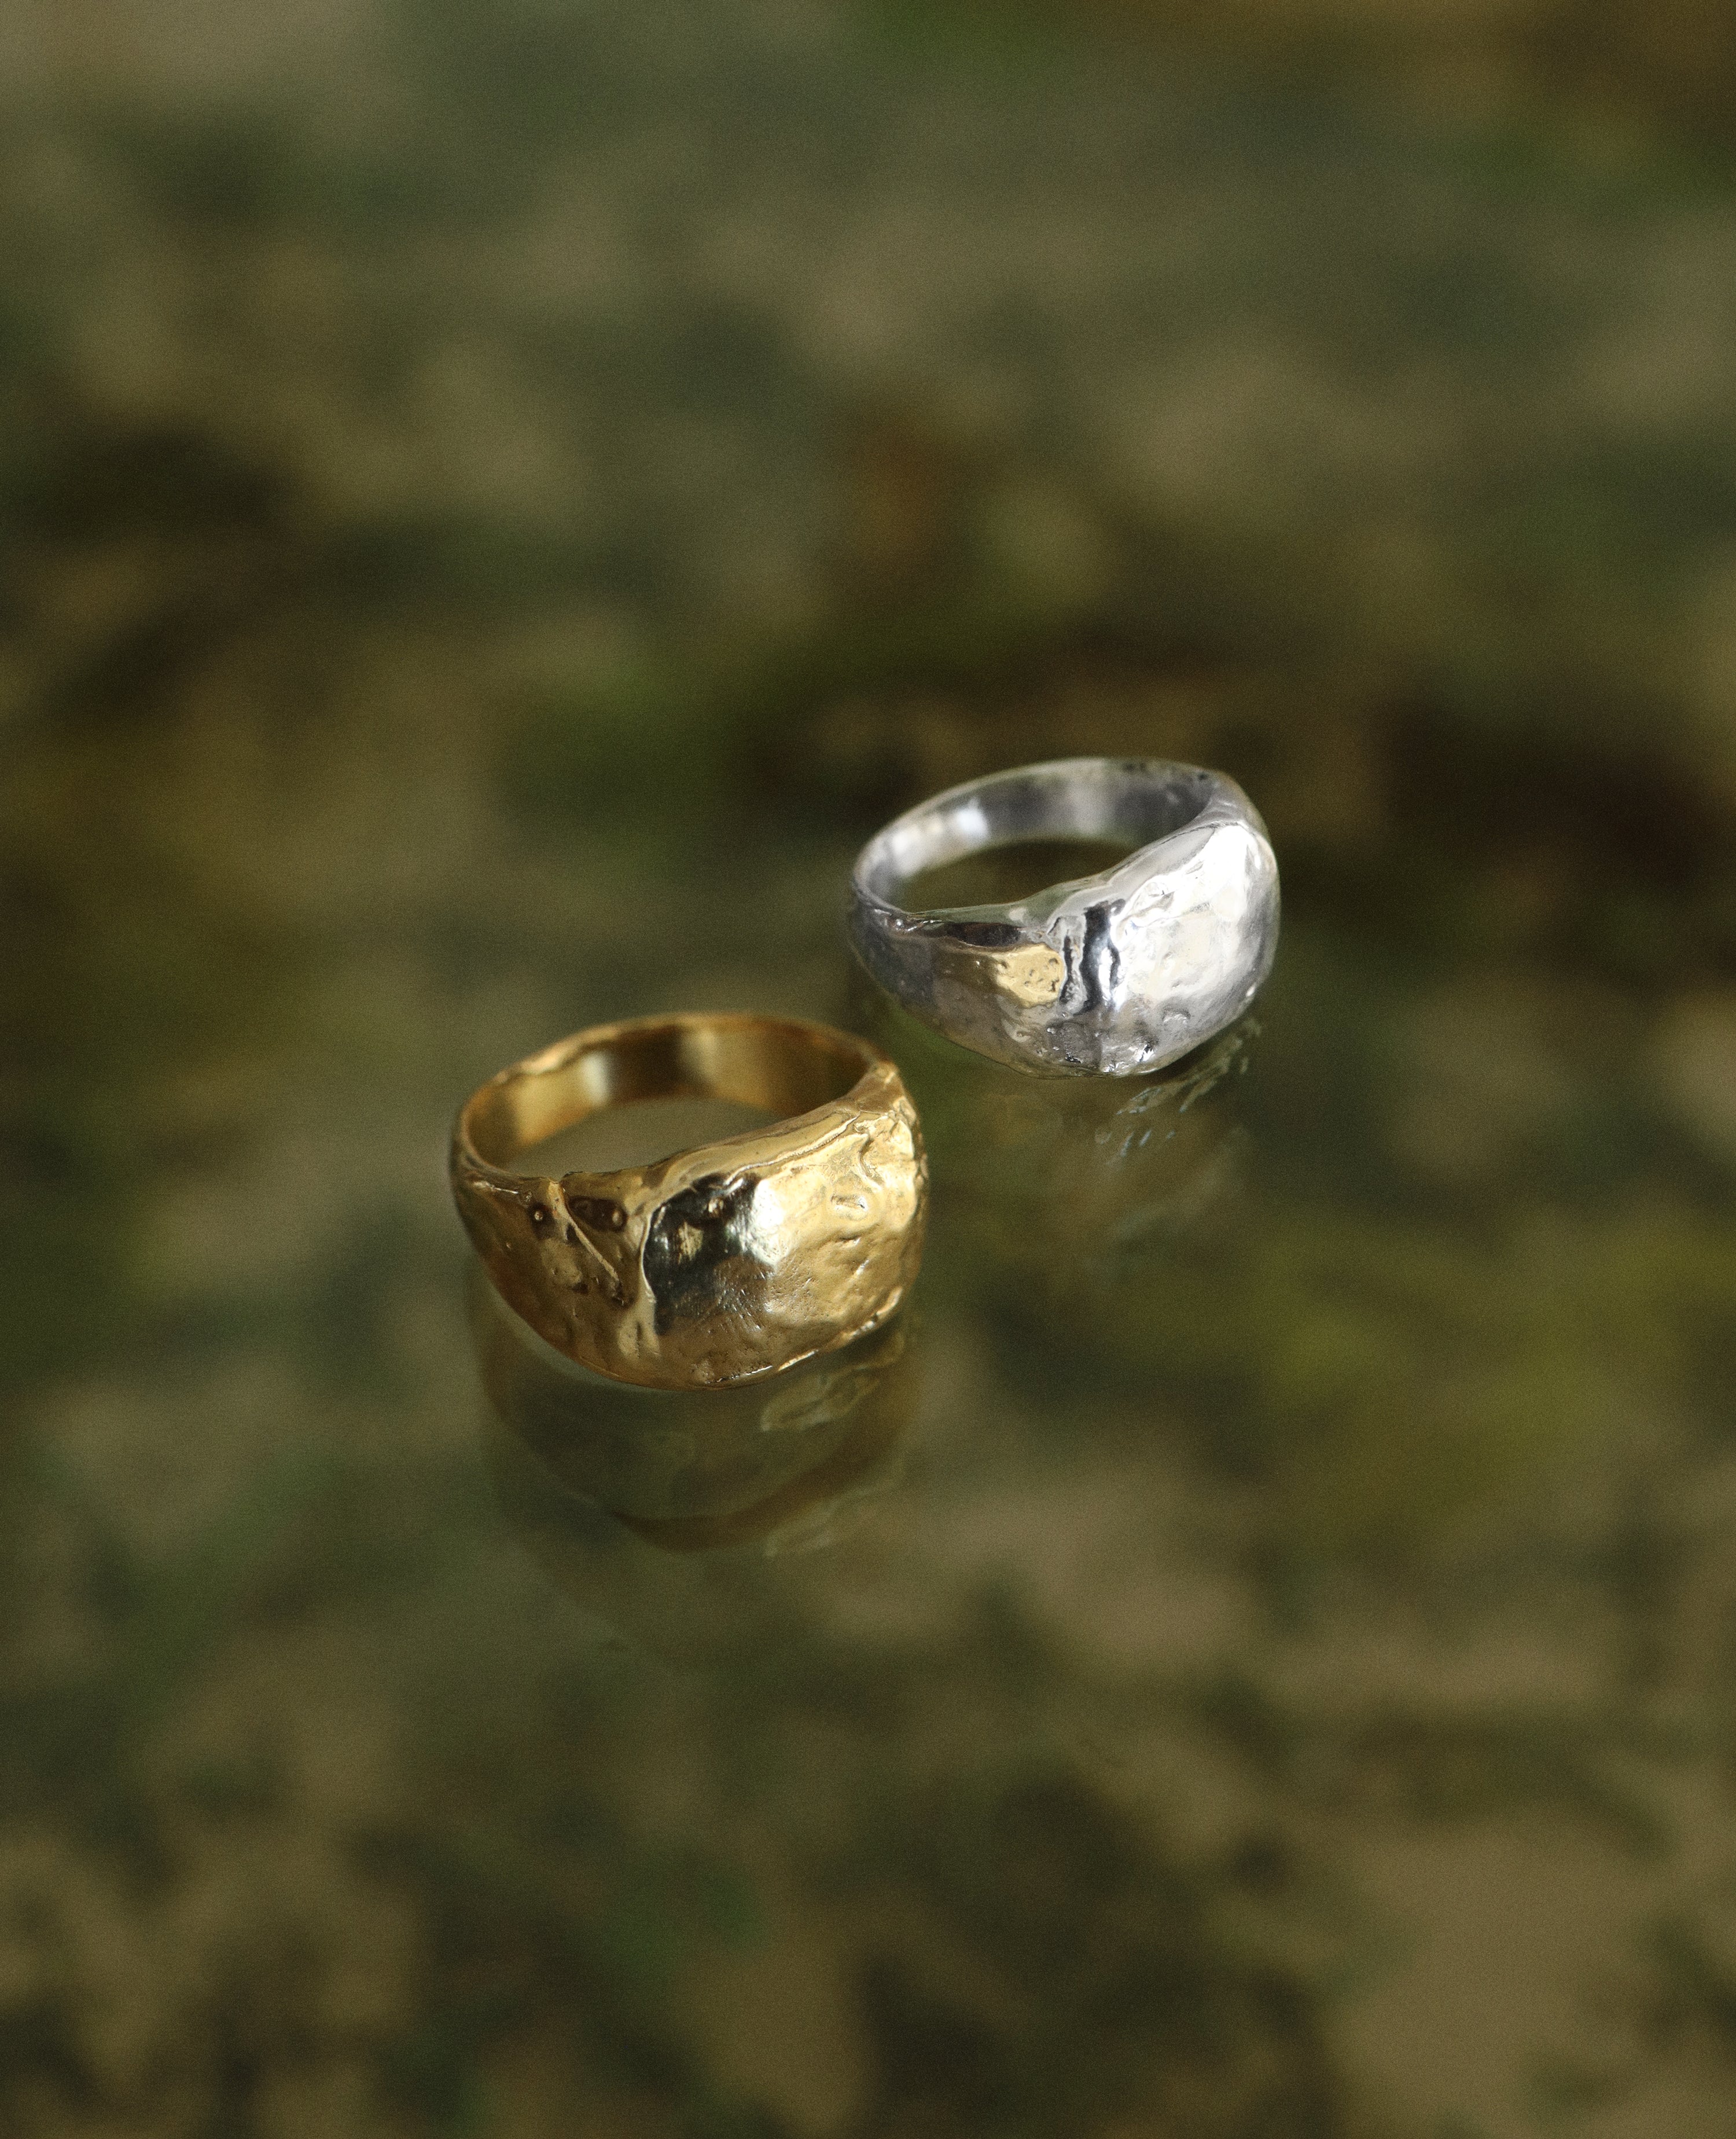 BOULDER SIGNET // golden ring - ORA-C jewelry - handmade jewelry by Montreal based independent designer Caroline Pham